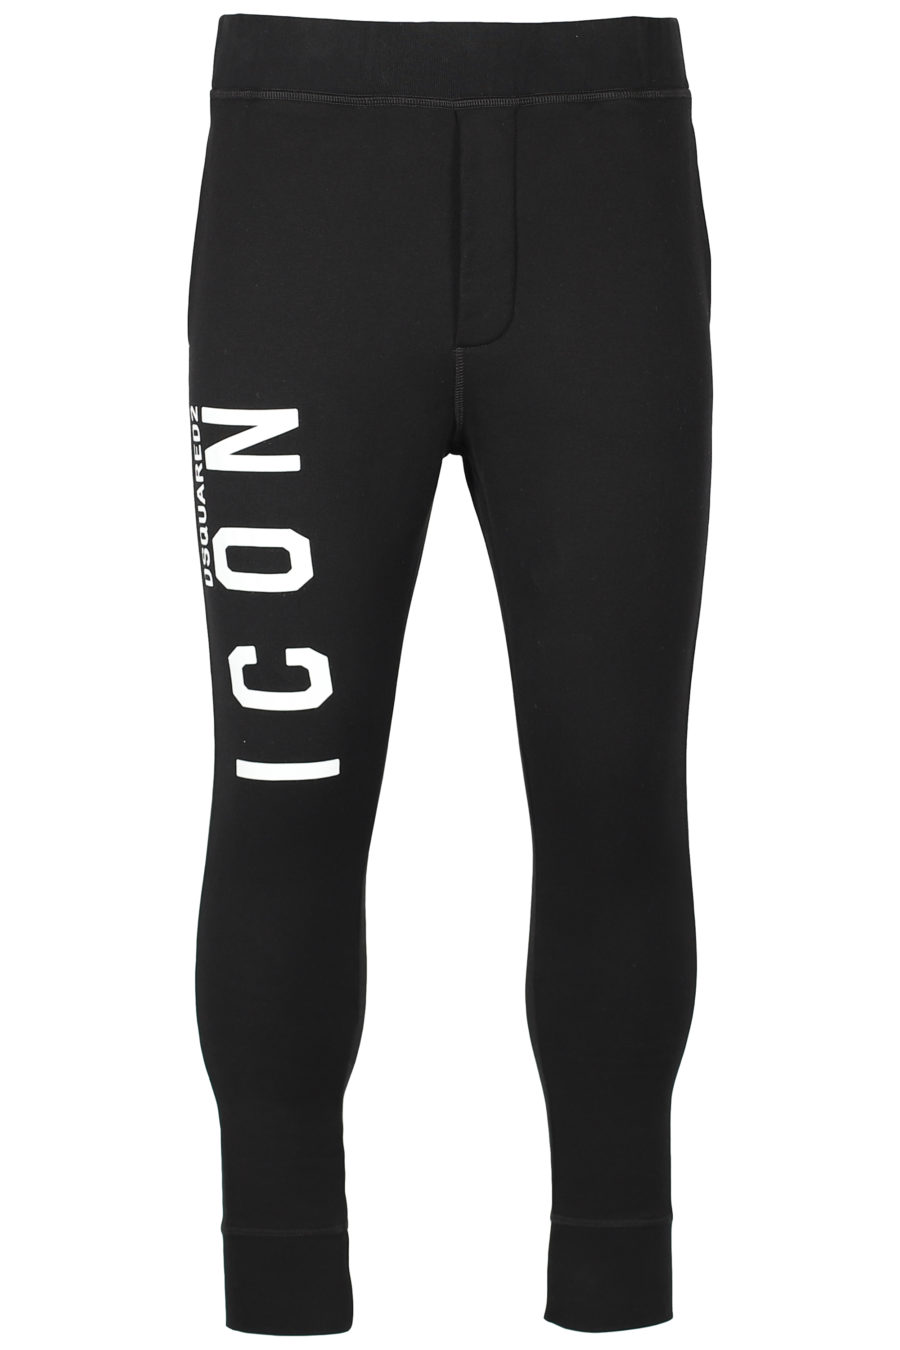 Pantalón chandal negro logo "Icon" - IMG 2593